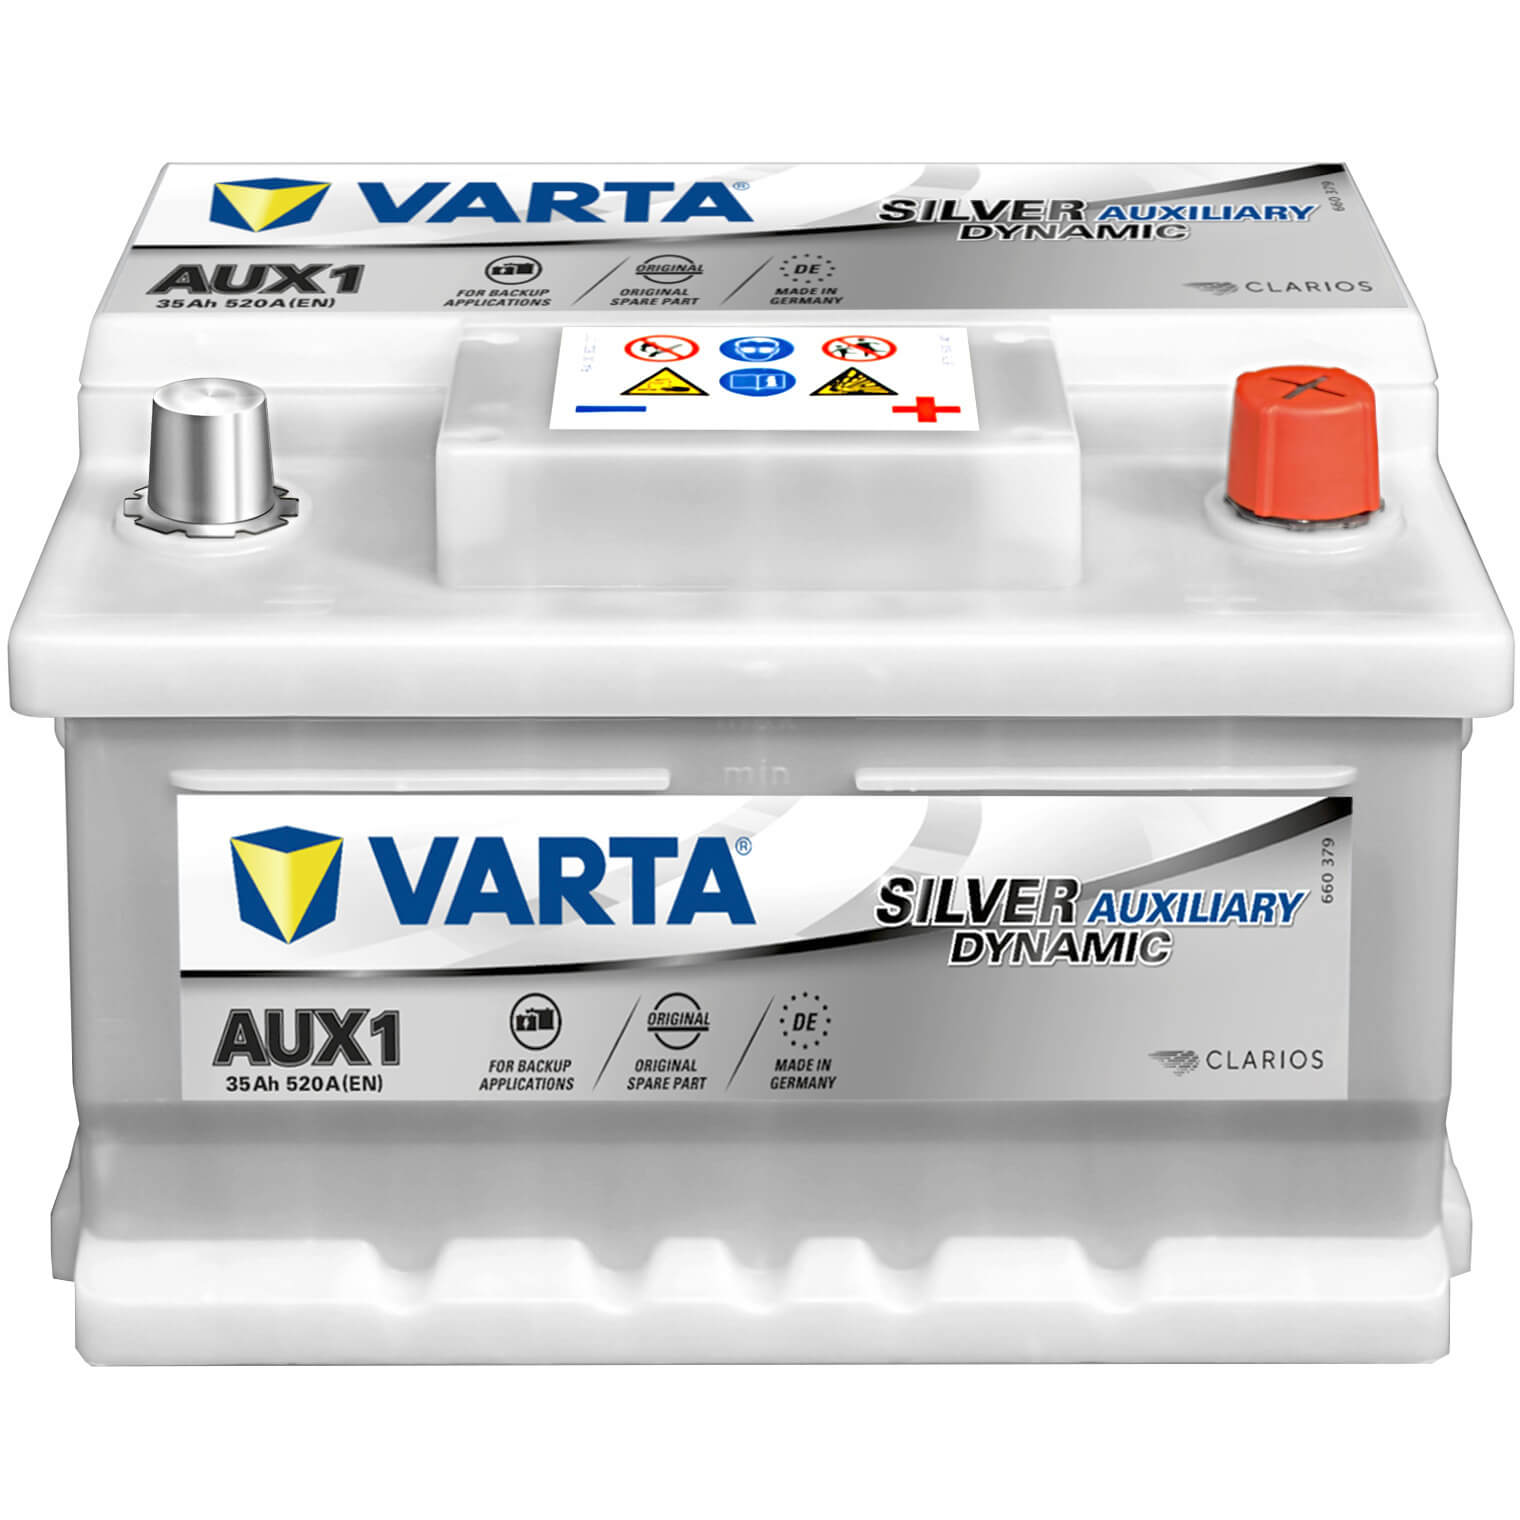 Varta AUX1 Silver Dynamic Auxiliary 12V 35Ah 520A/EN